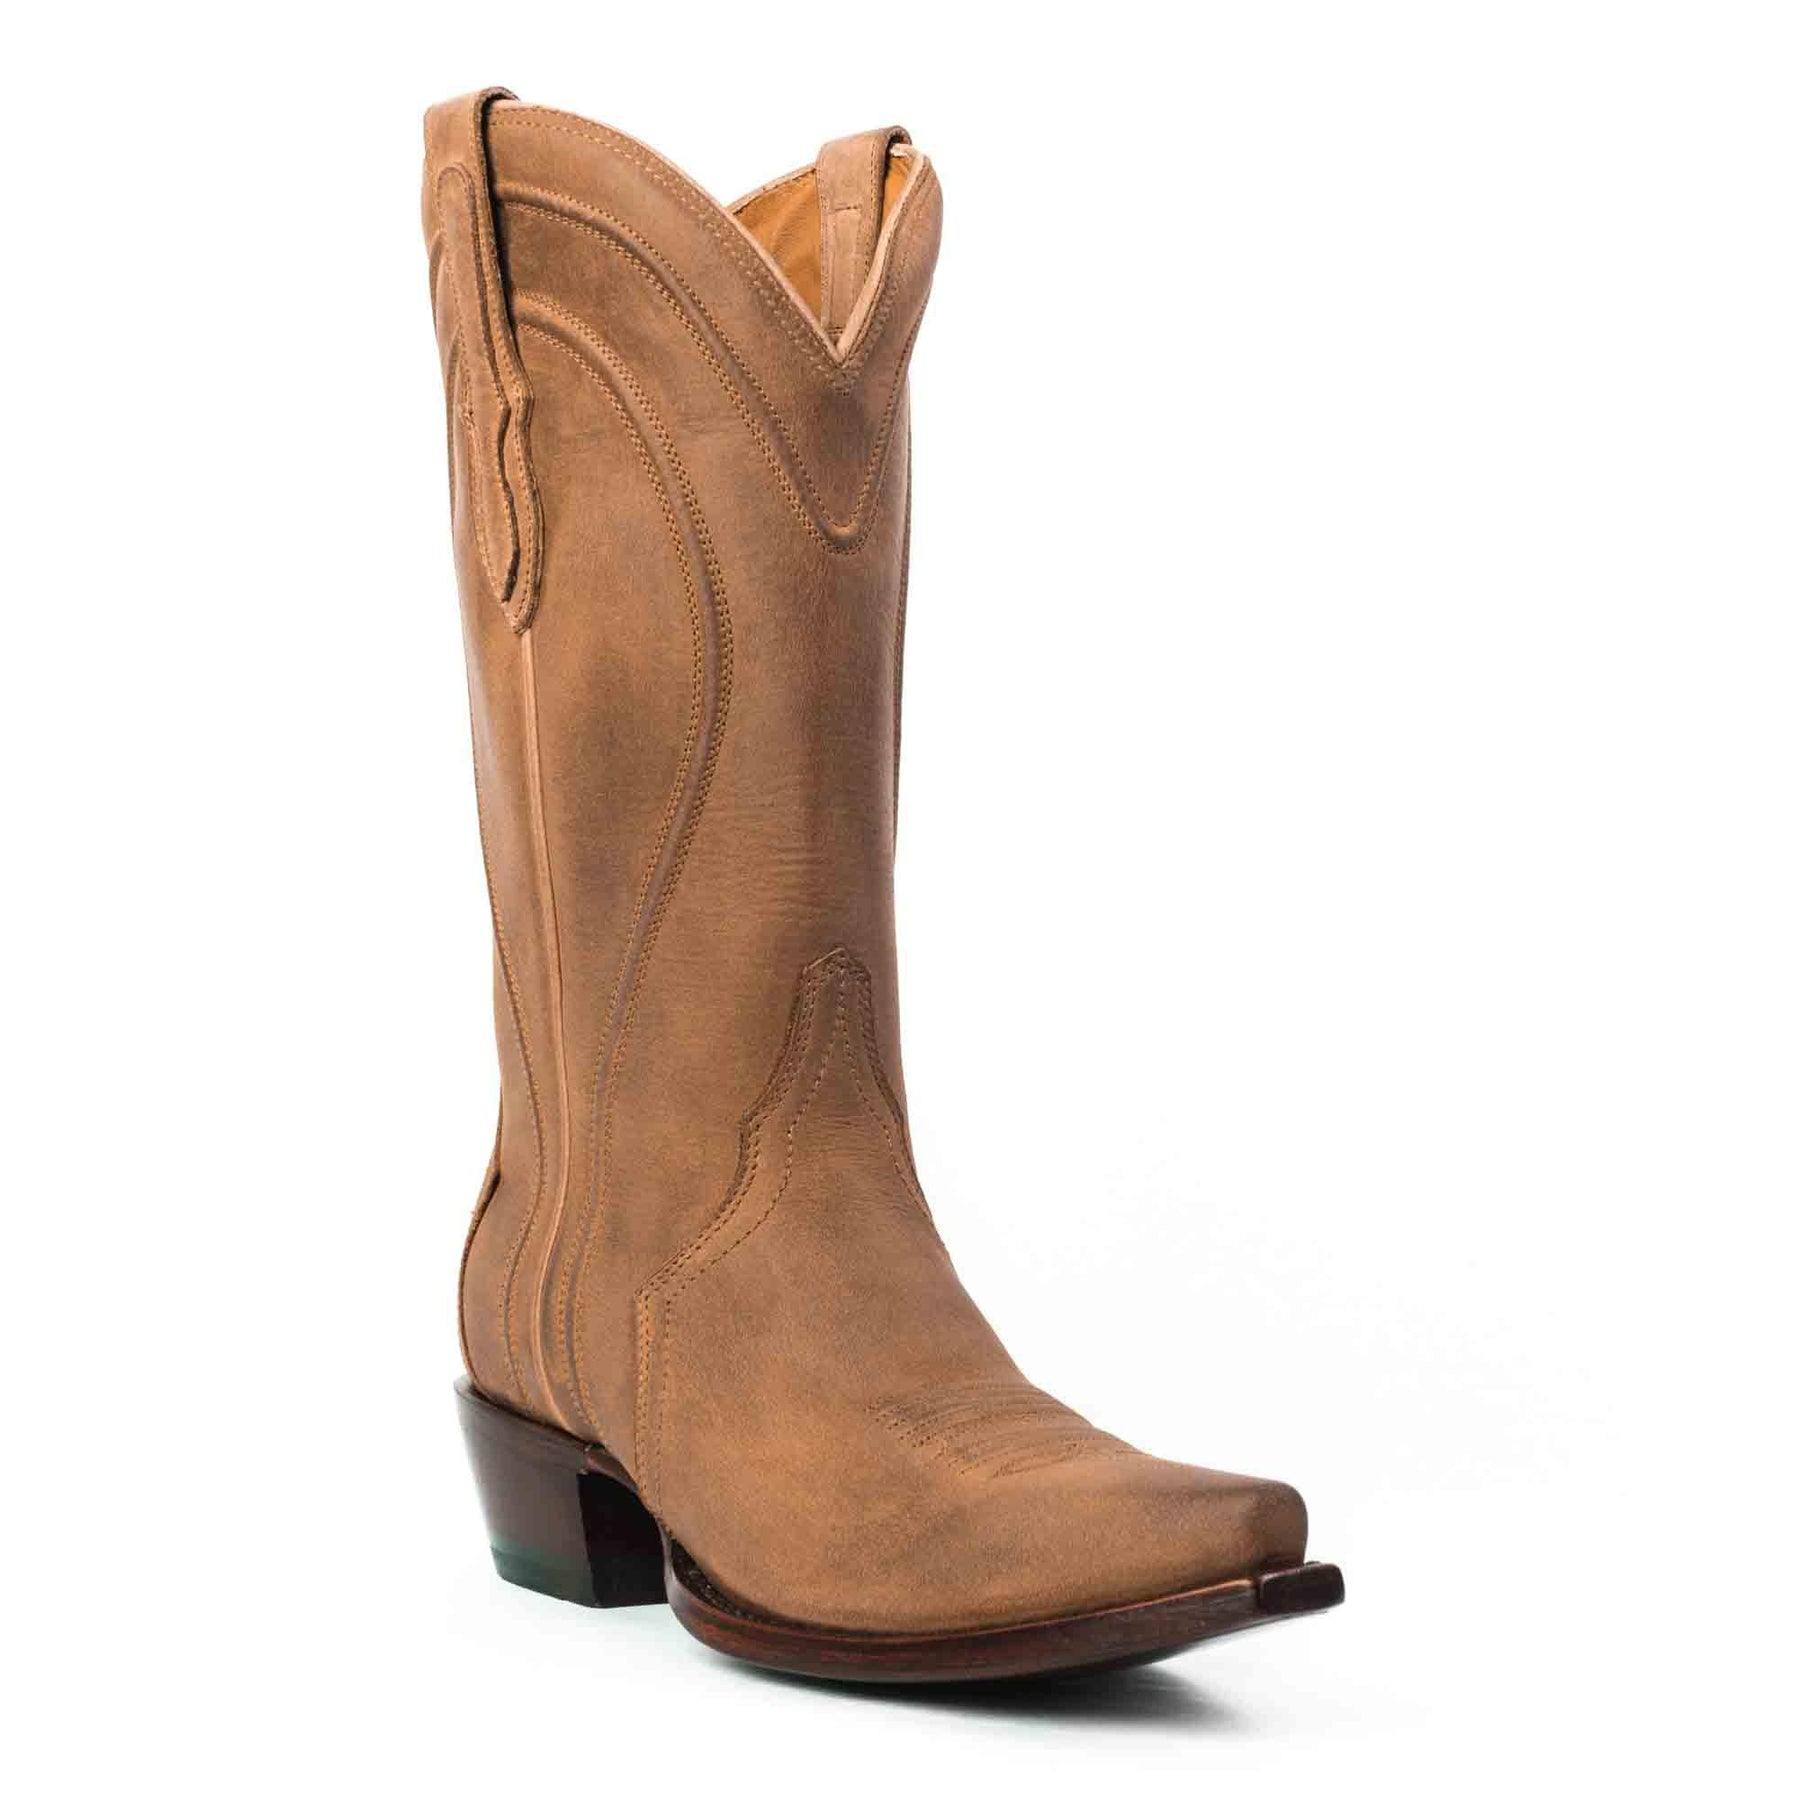 Women's Snip-Toe Rock Ranch Calfskin Cowgirl Boot by RUJO